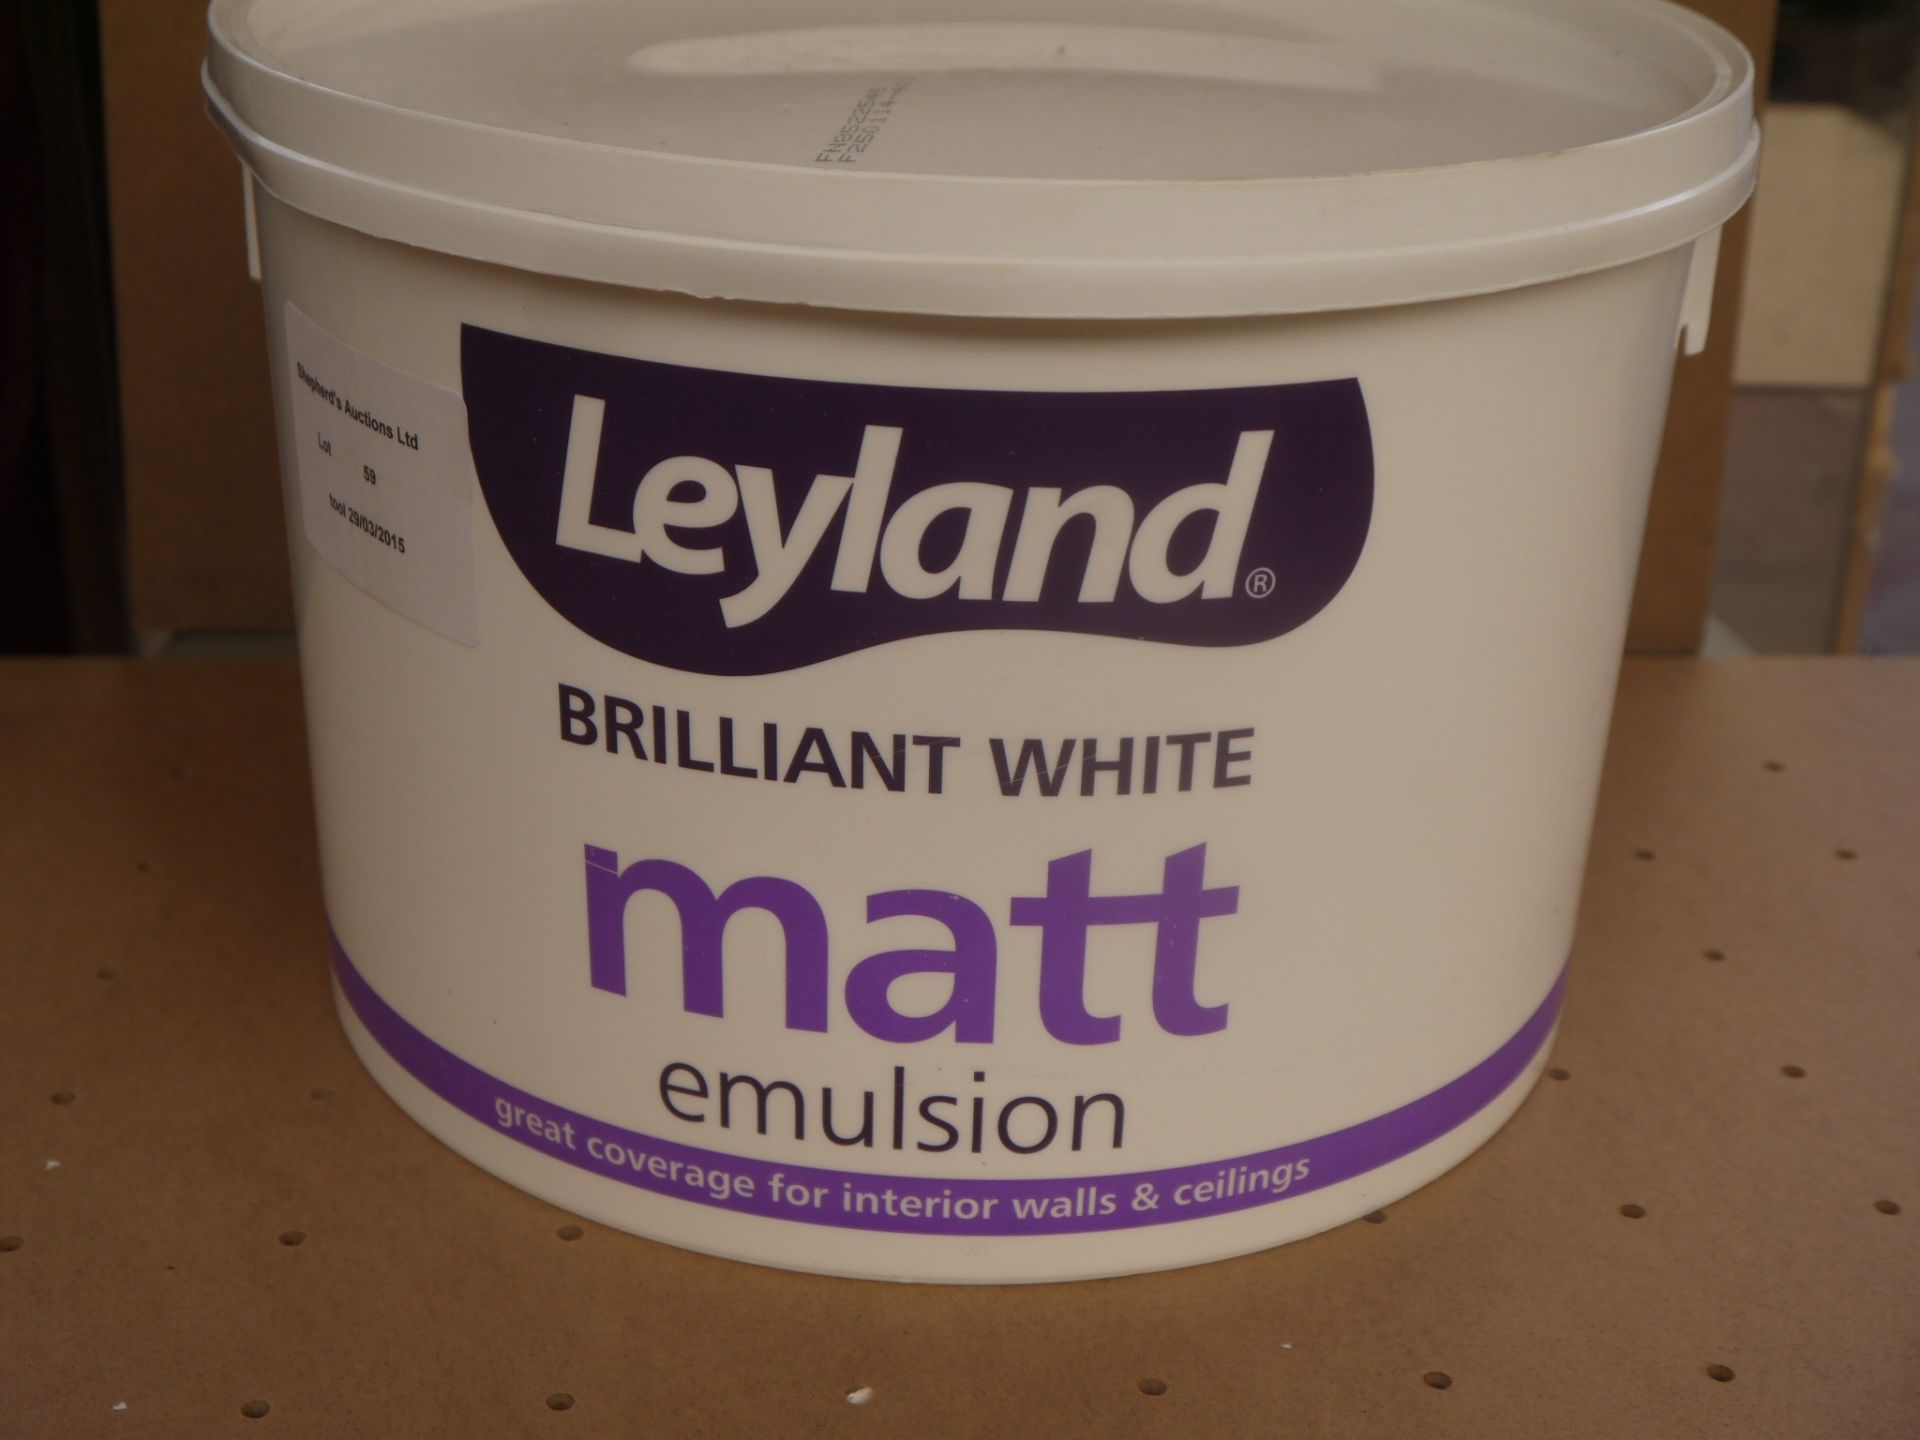 Leyland Brilliant White Matt Emulsion Paint, 10 litre. New.